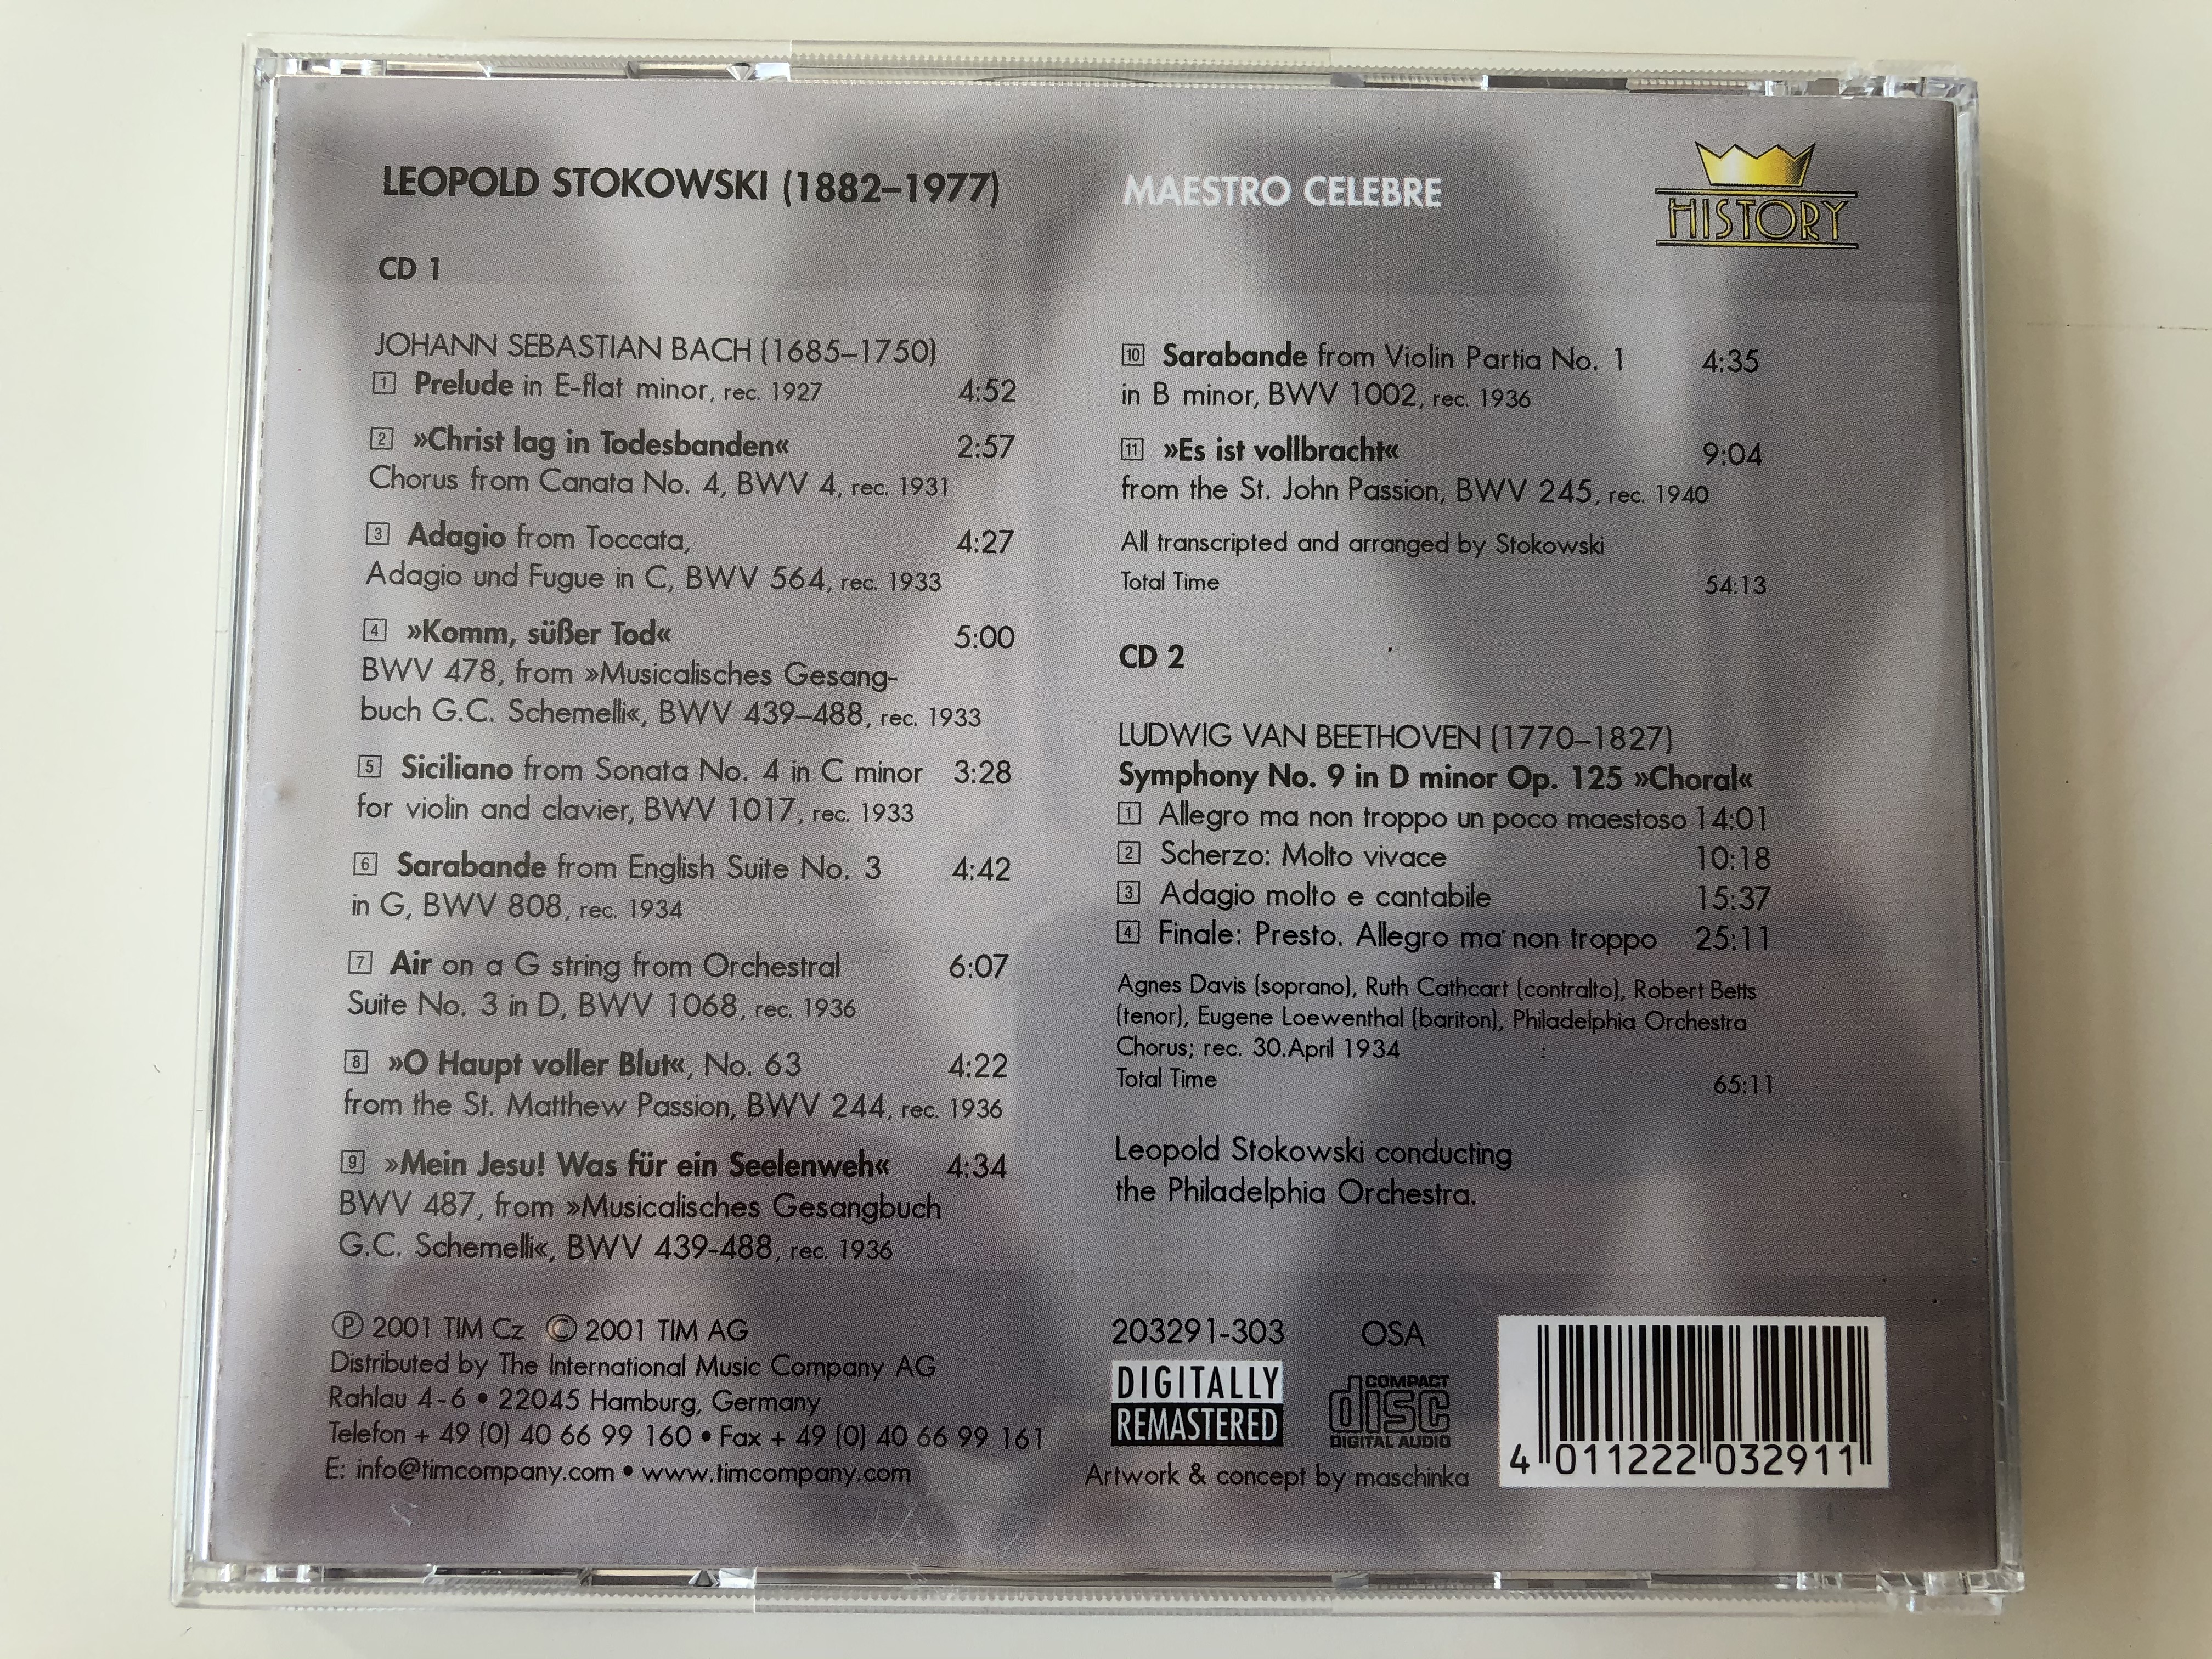 stokowski-maestro-celebre-bach-beethoven-tim-ag-2x-audio-cd-2001-203291-303-9-.jpg